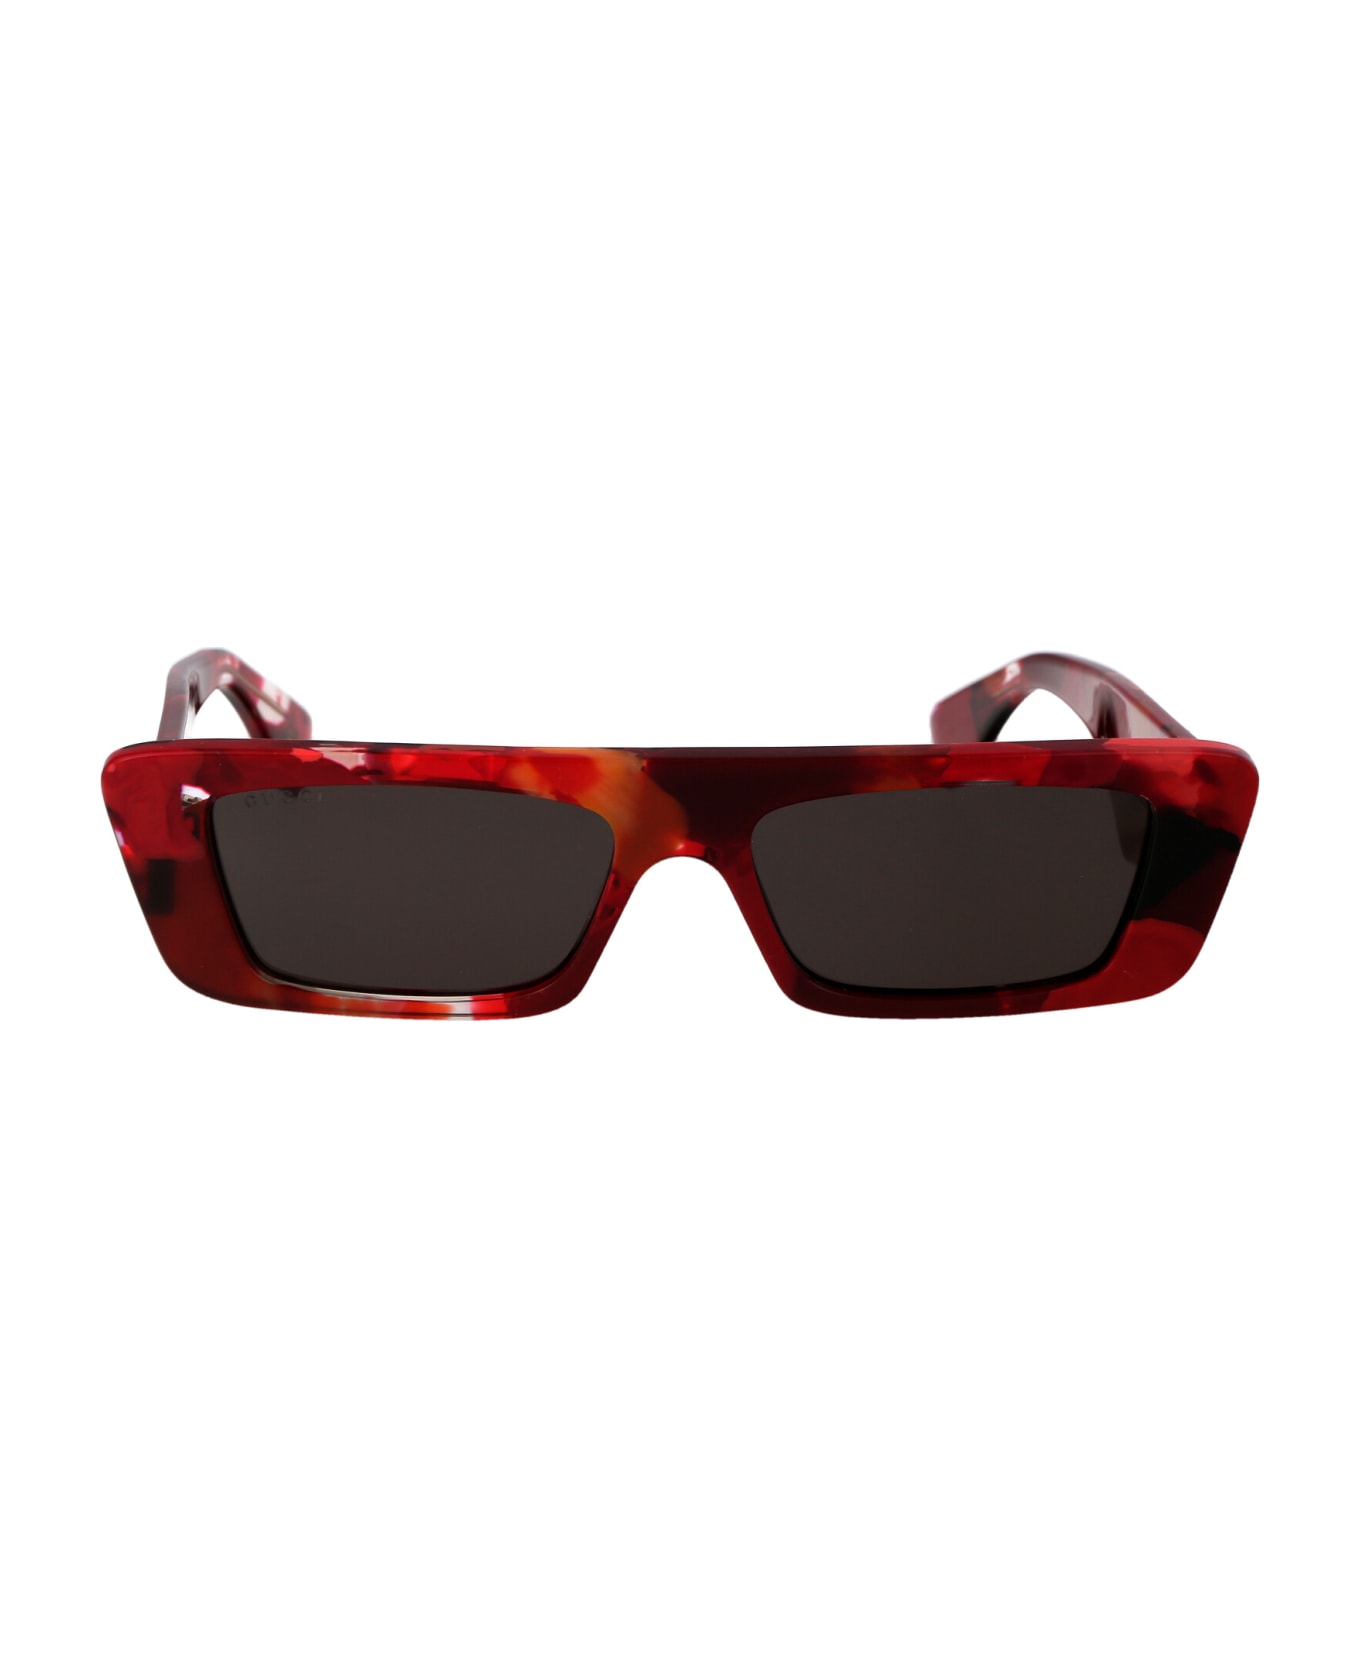 Gucci Eyewear Gg1625s Sunglasses - 002 RED RED GREY